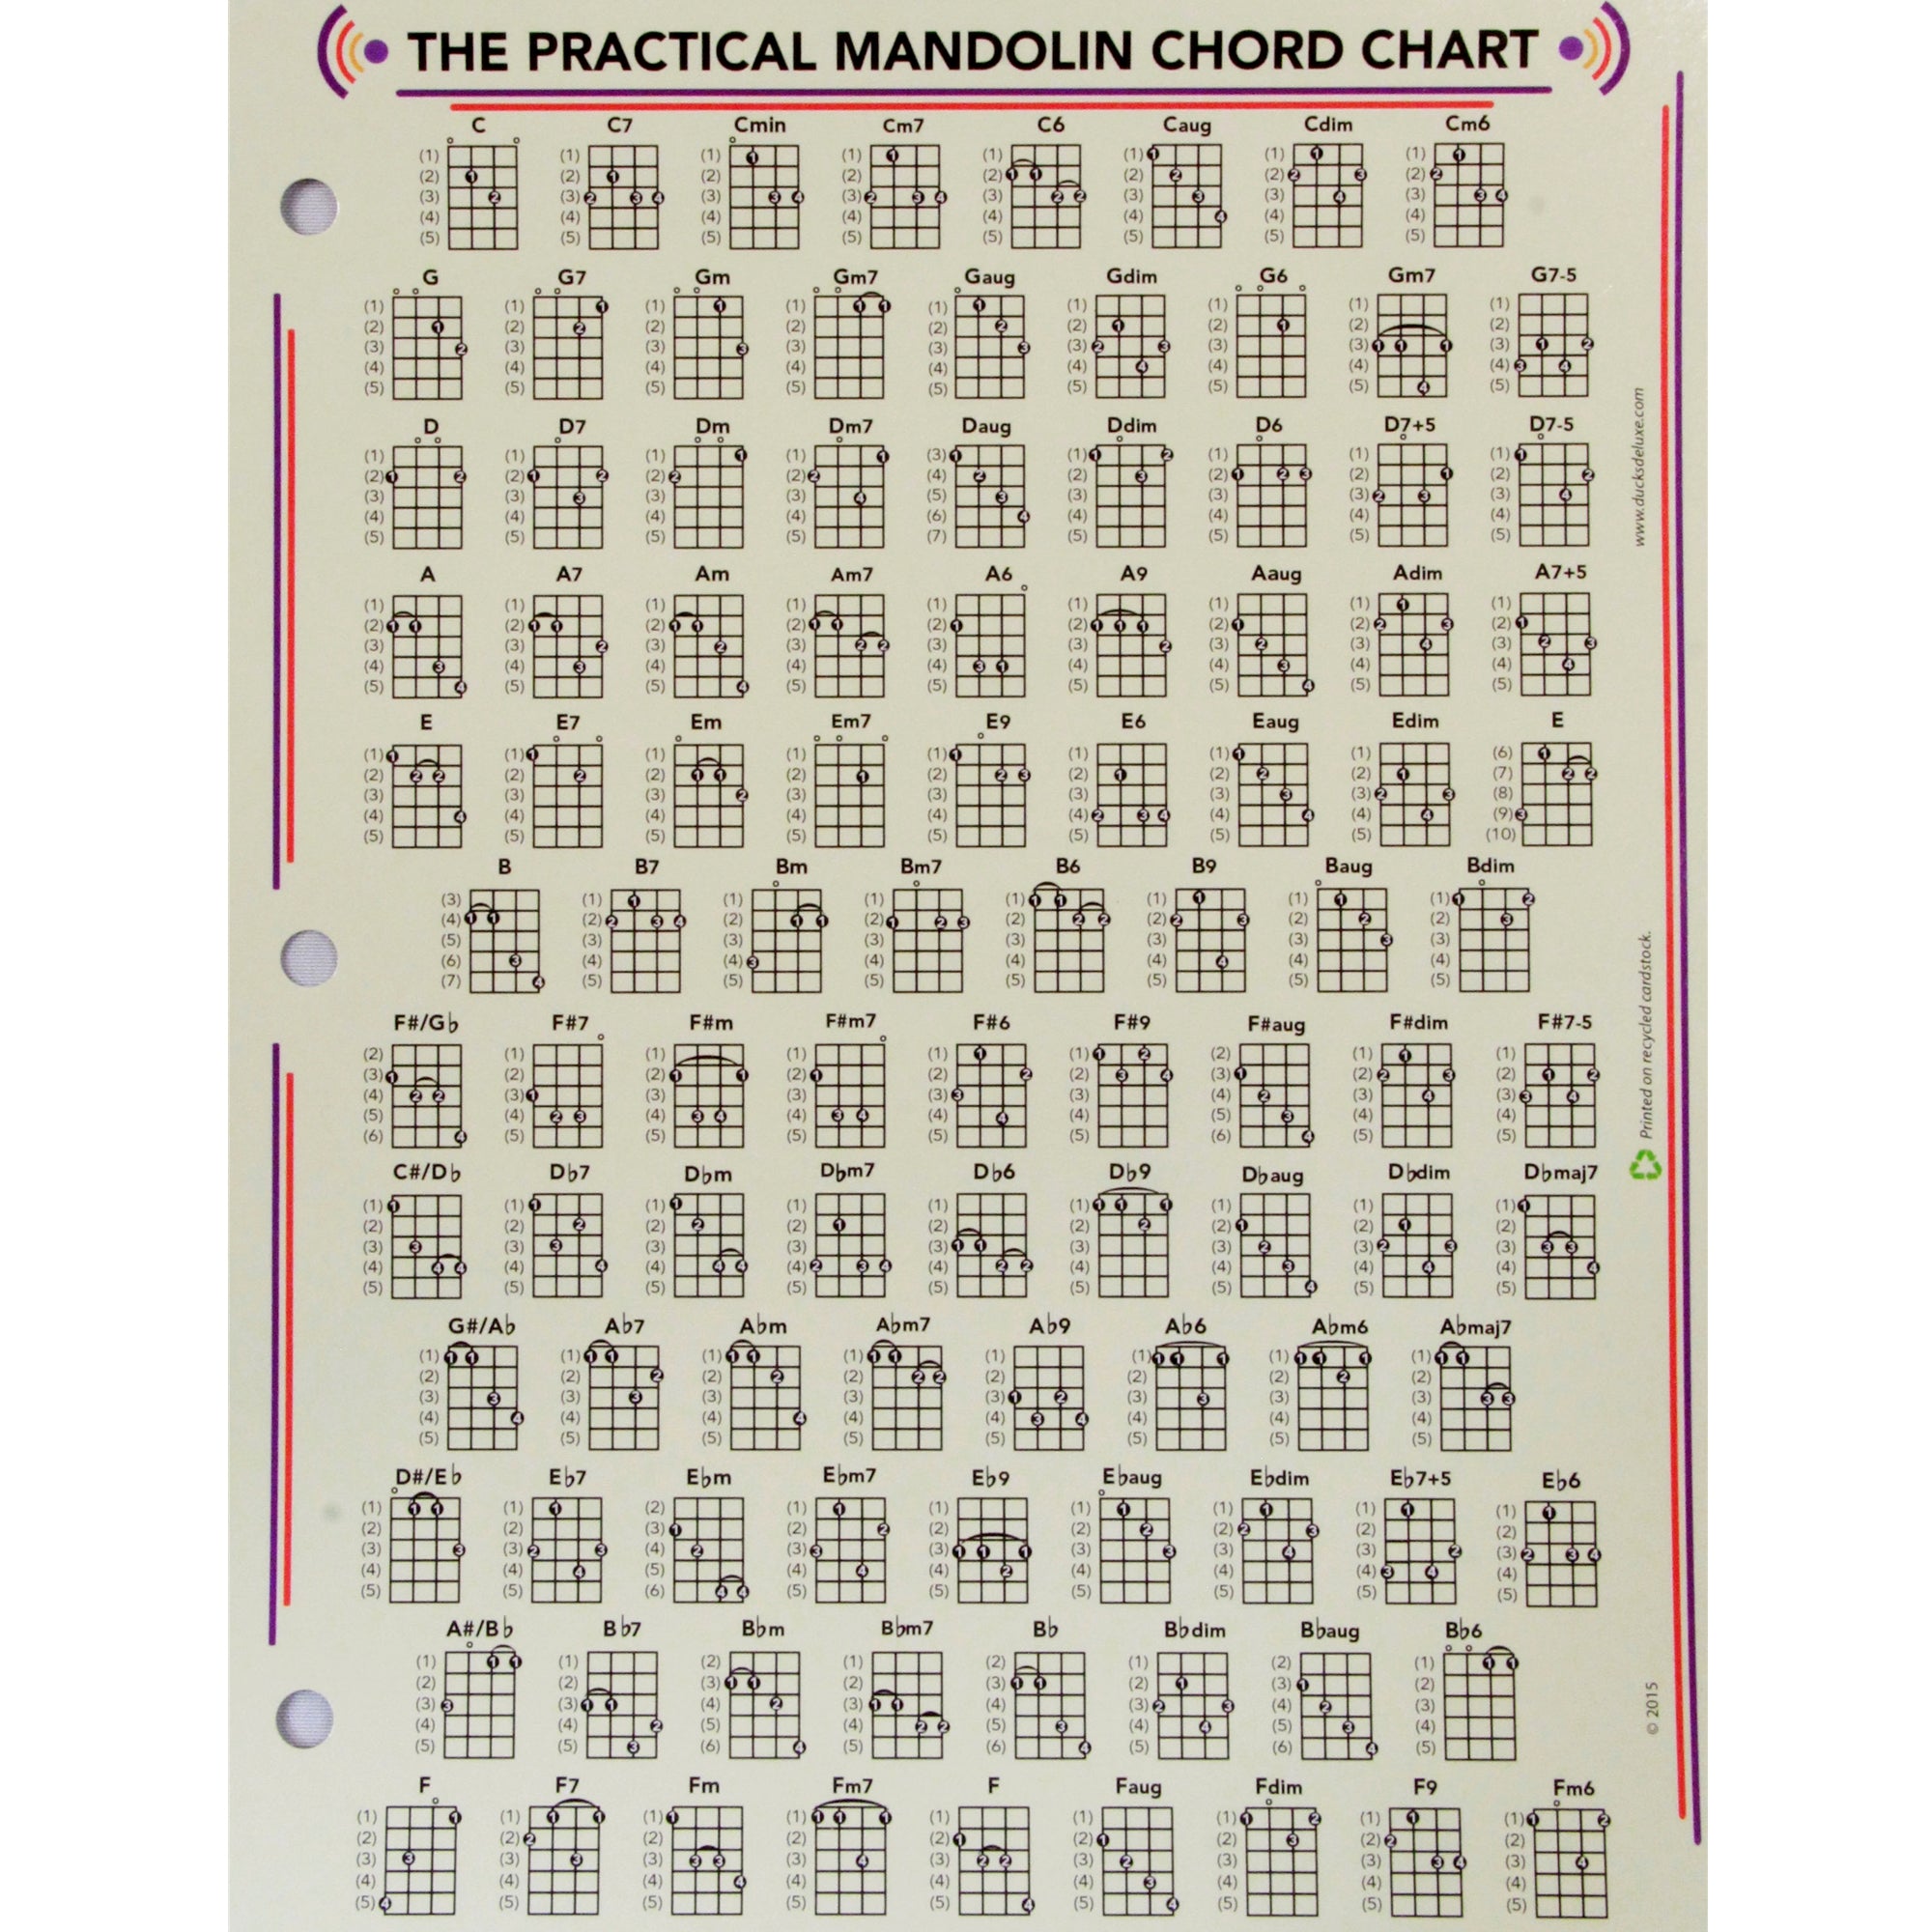 DUCKS DELUXE MCC Practical Mandolin Chord/Fretboard Cart